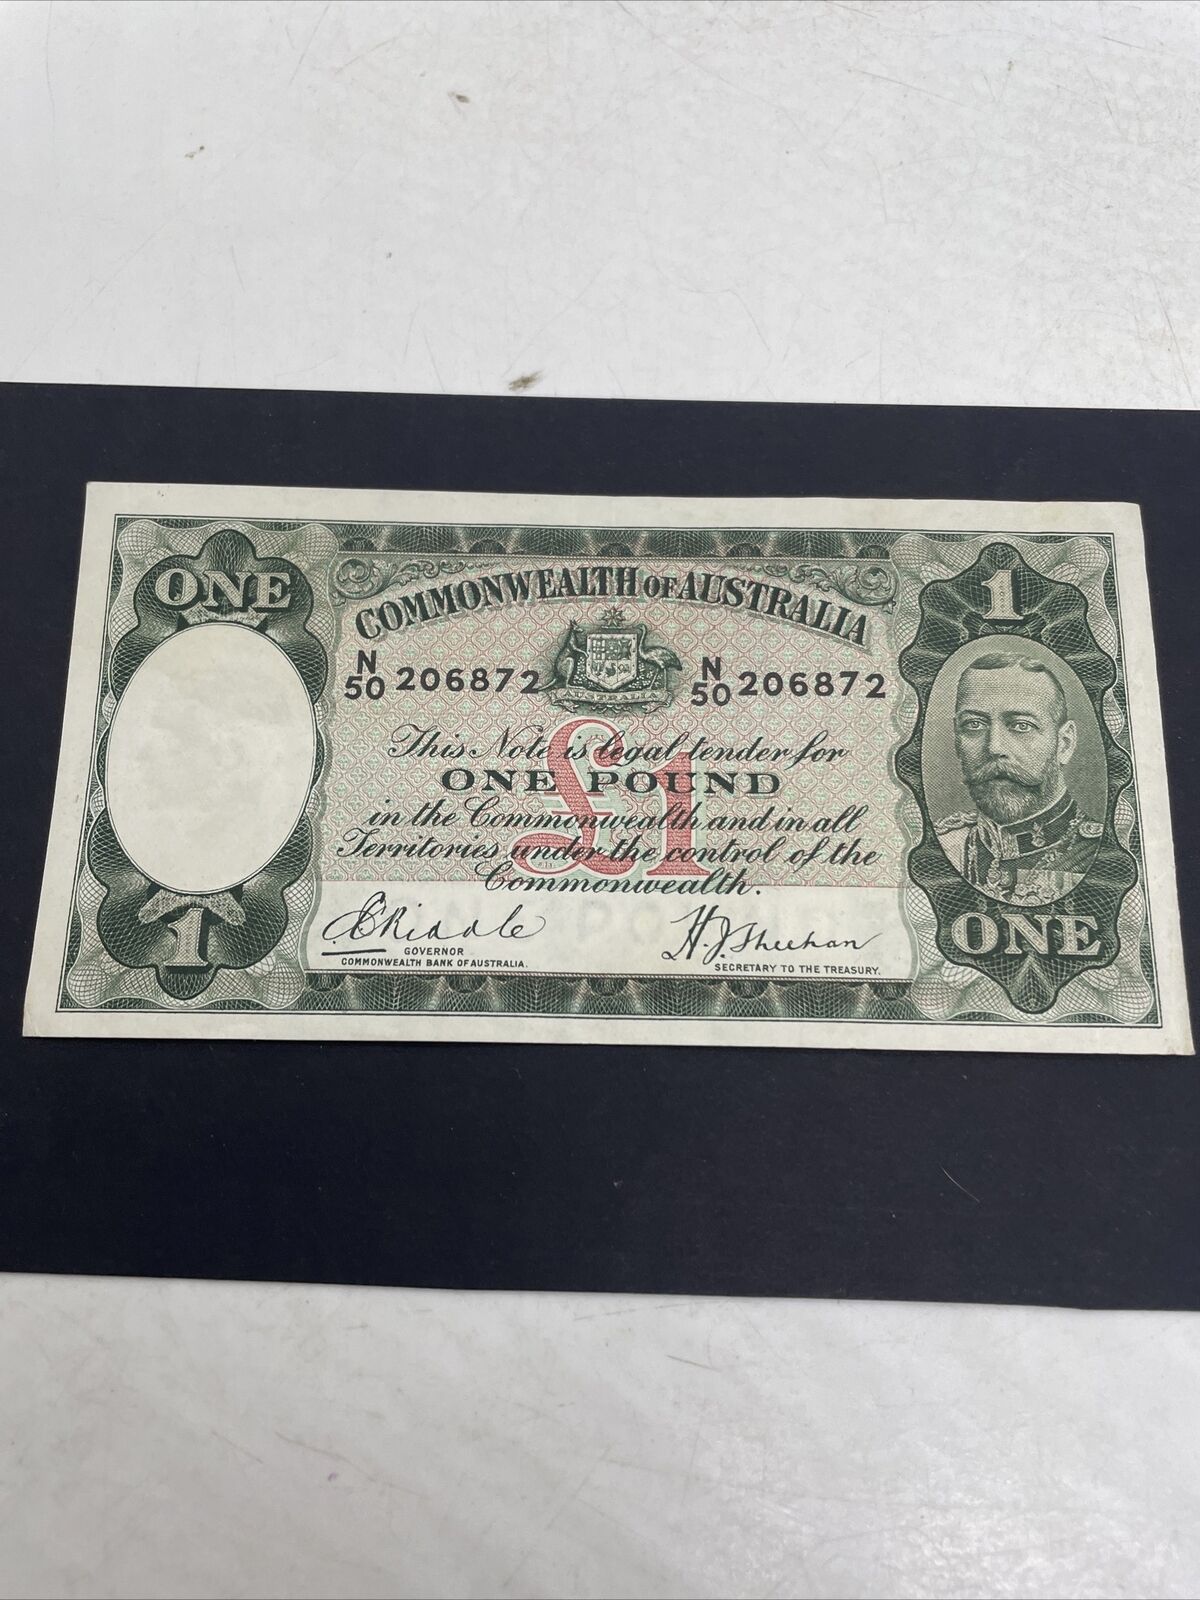 Australian 1933 Rare One Pound Note Riddle/Sheenhan N50 206872 Pre Decimal